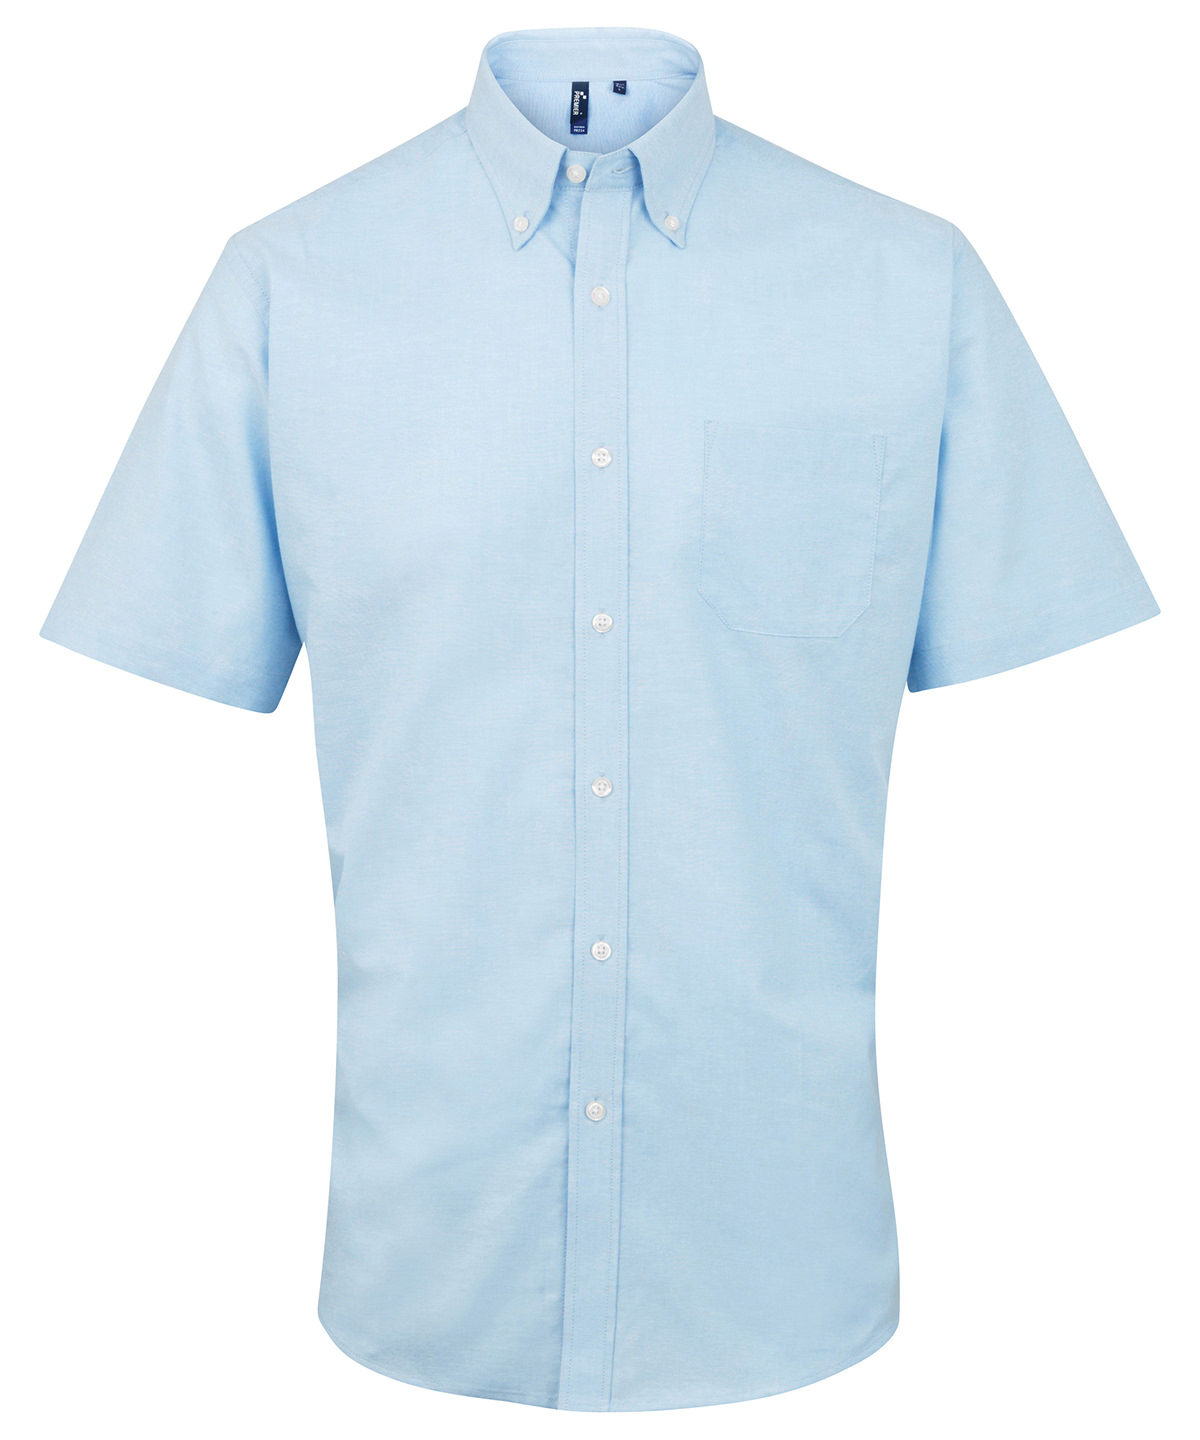 Signature Oxford Short Sleeve Shirt - Printingx